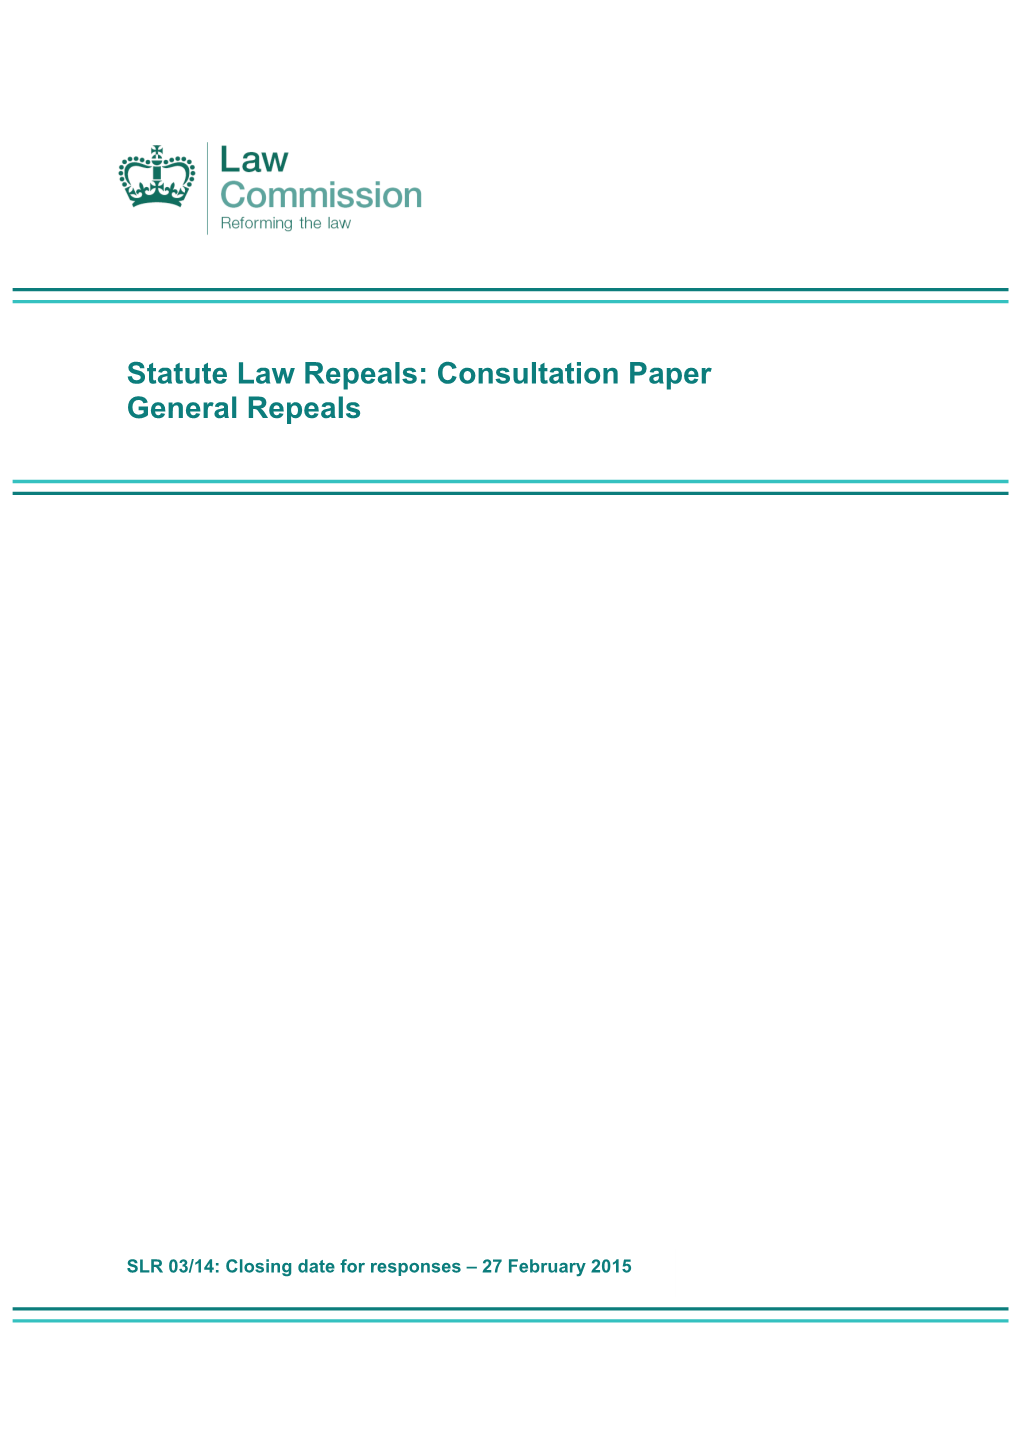 Statute Law Repeals: Consultation Paper General Repeals